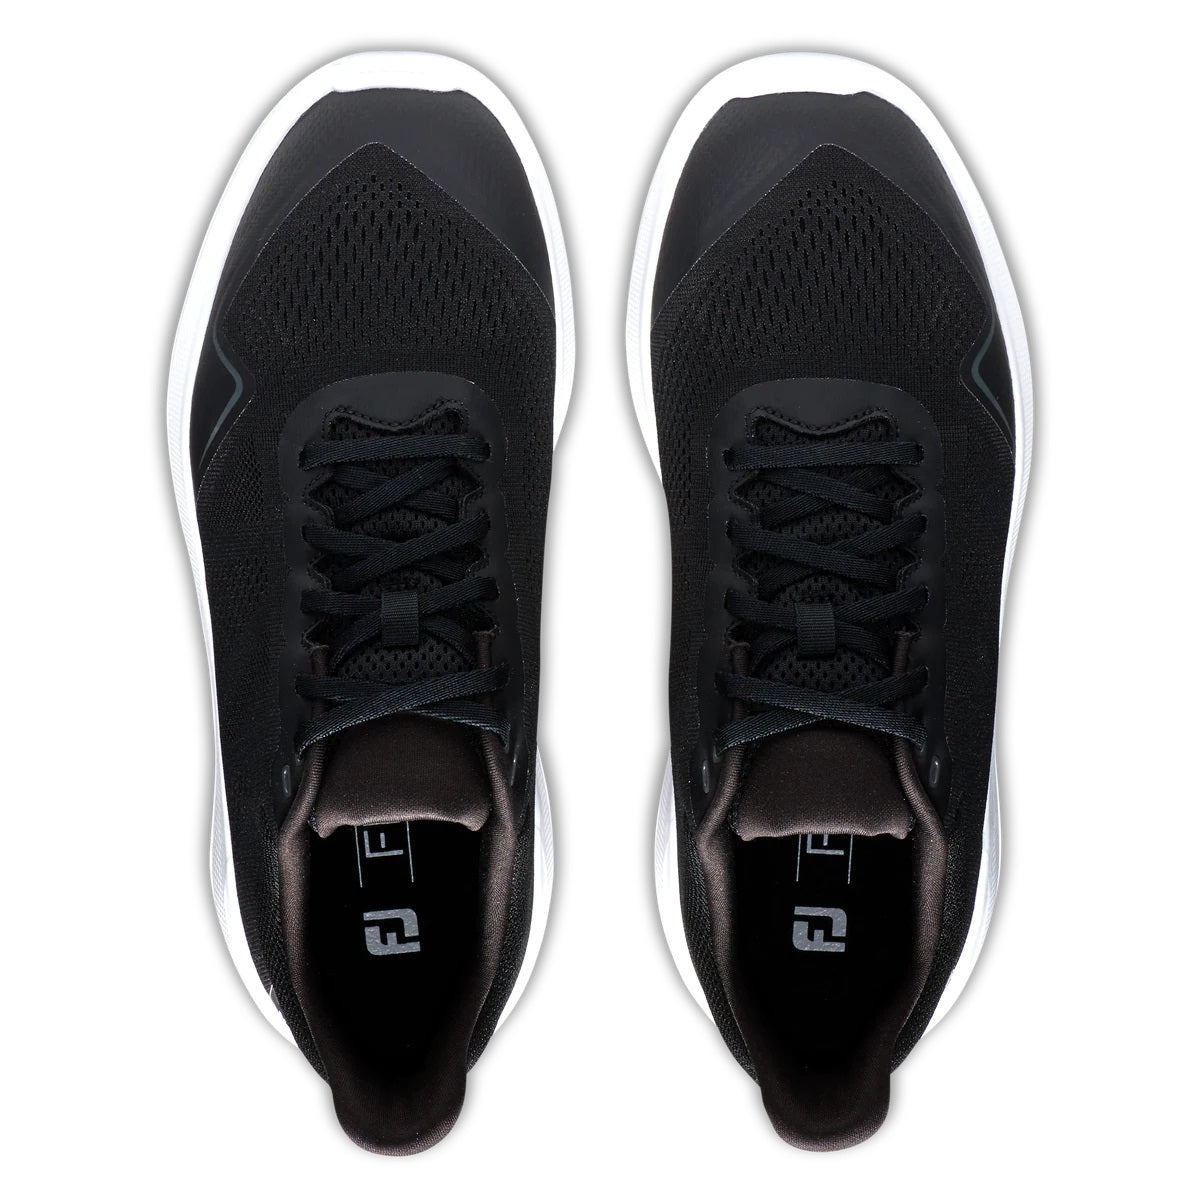 FootJoy Flex Golf Shoes Black/White/Red 56141 (Previous Season Style)